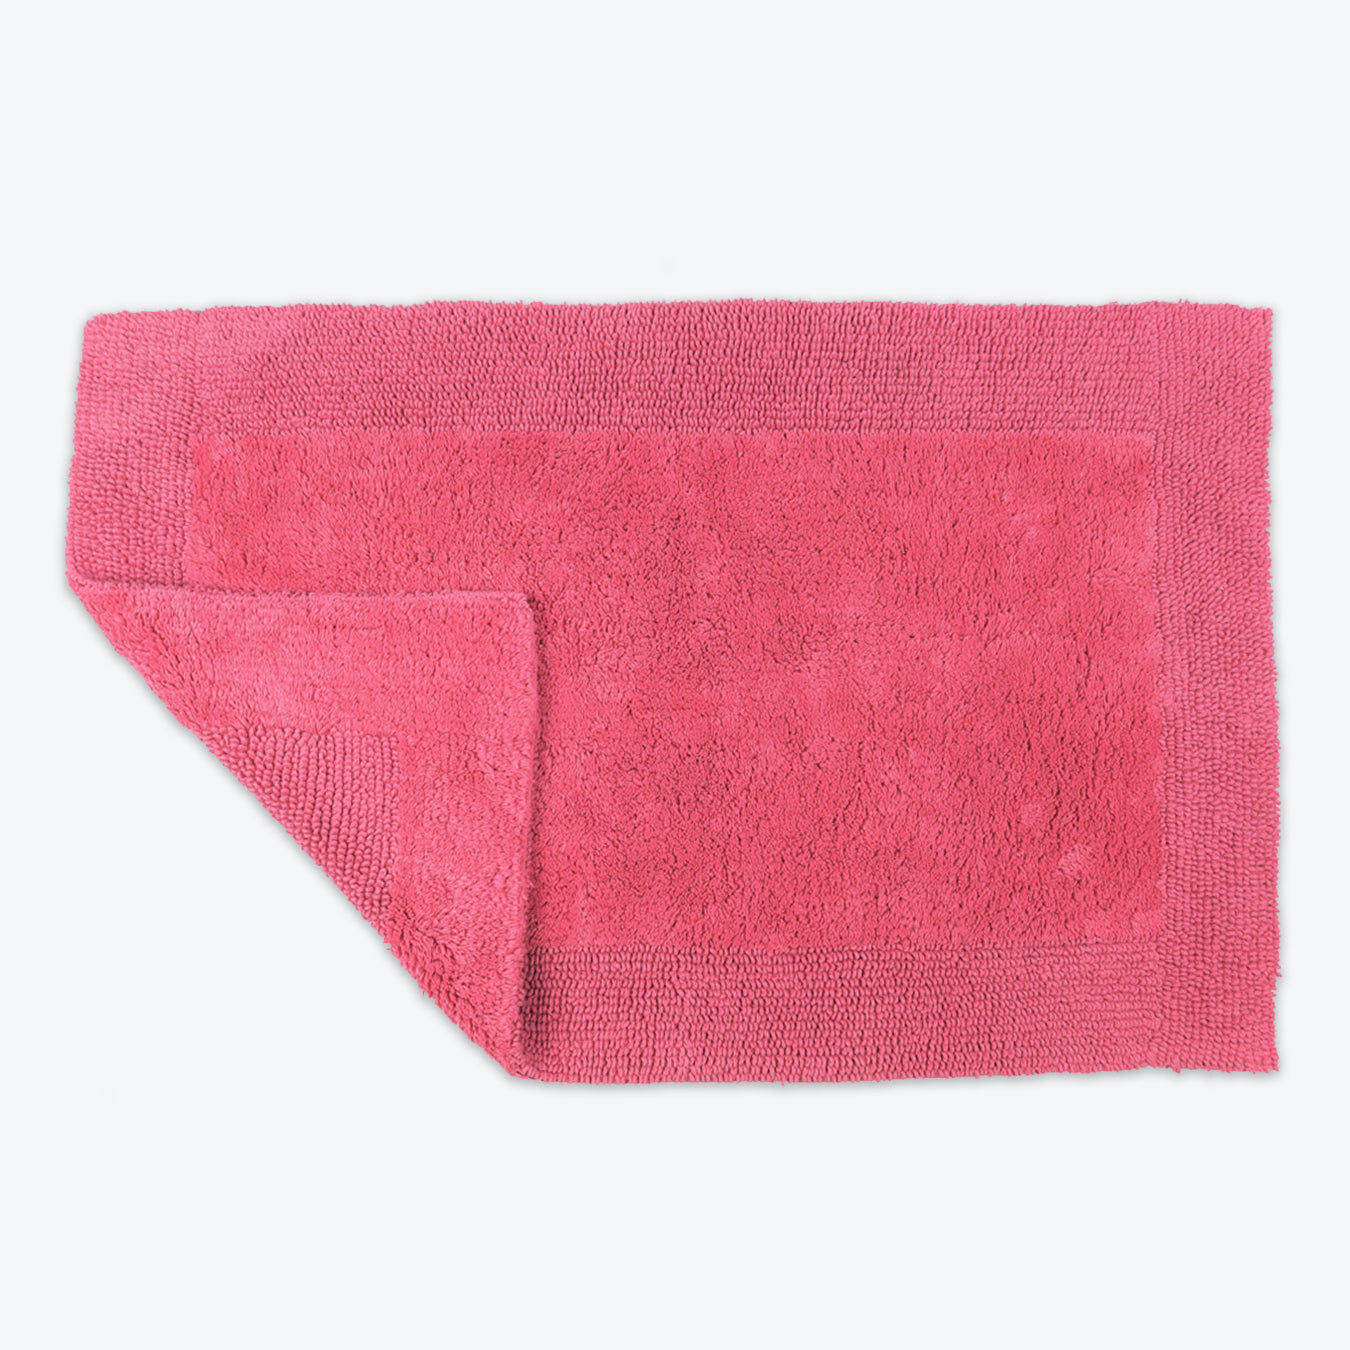 Hot Pink Reversible Cotton Large Bath Mat - Luxury Thick Bathmat